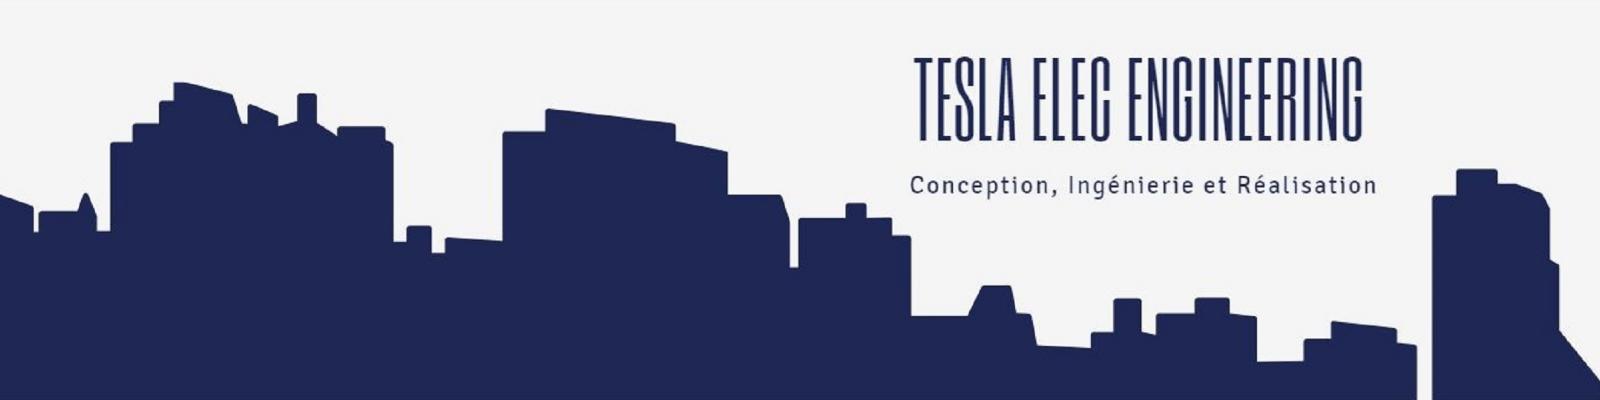 Tesla Elec Engineering